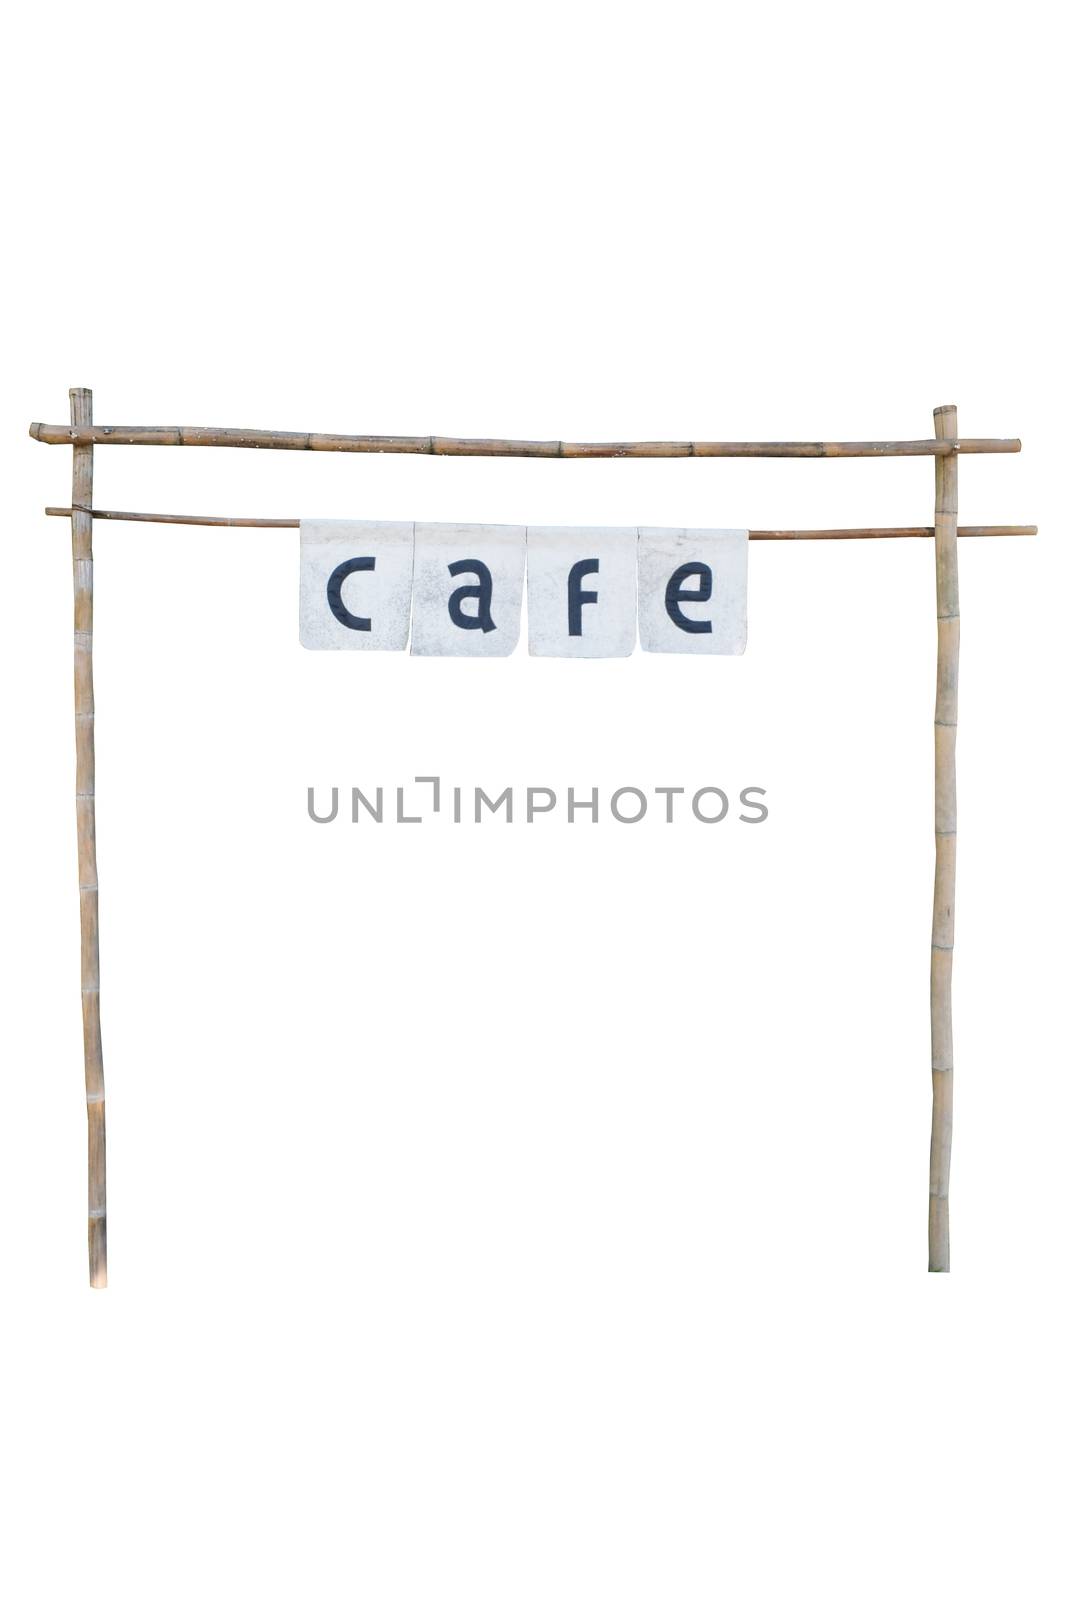 Bamboo cafe entrance on white background by Surasak